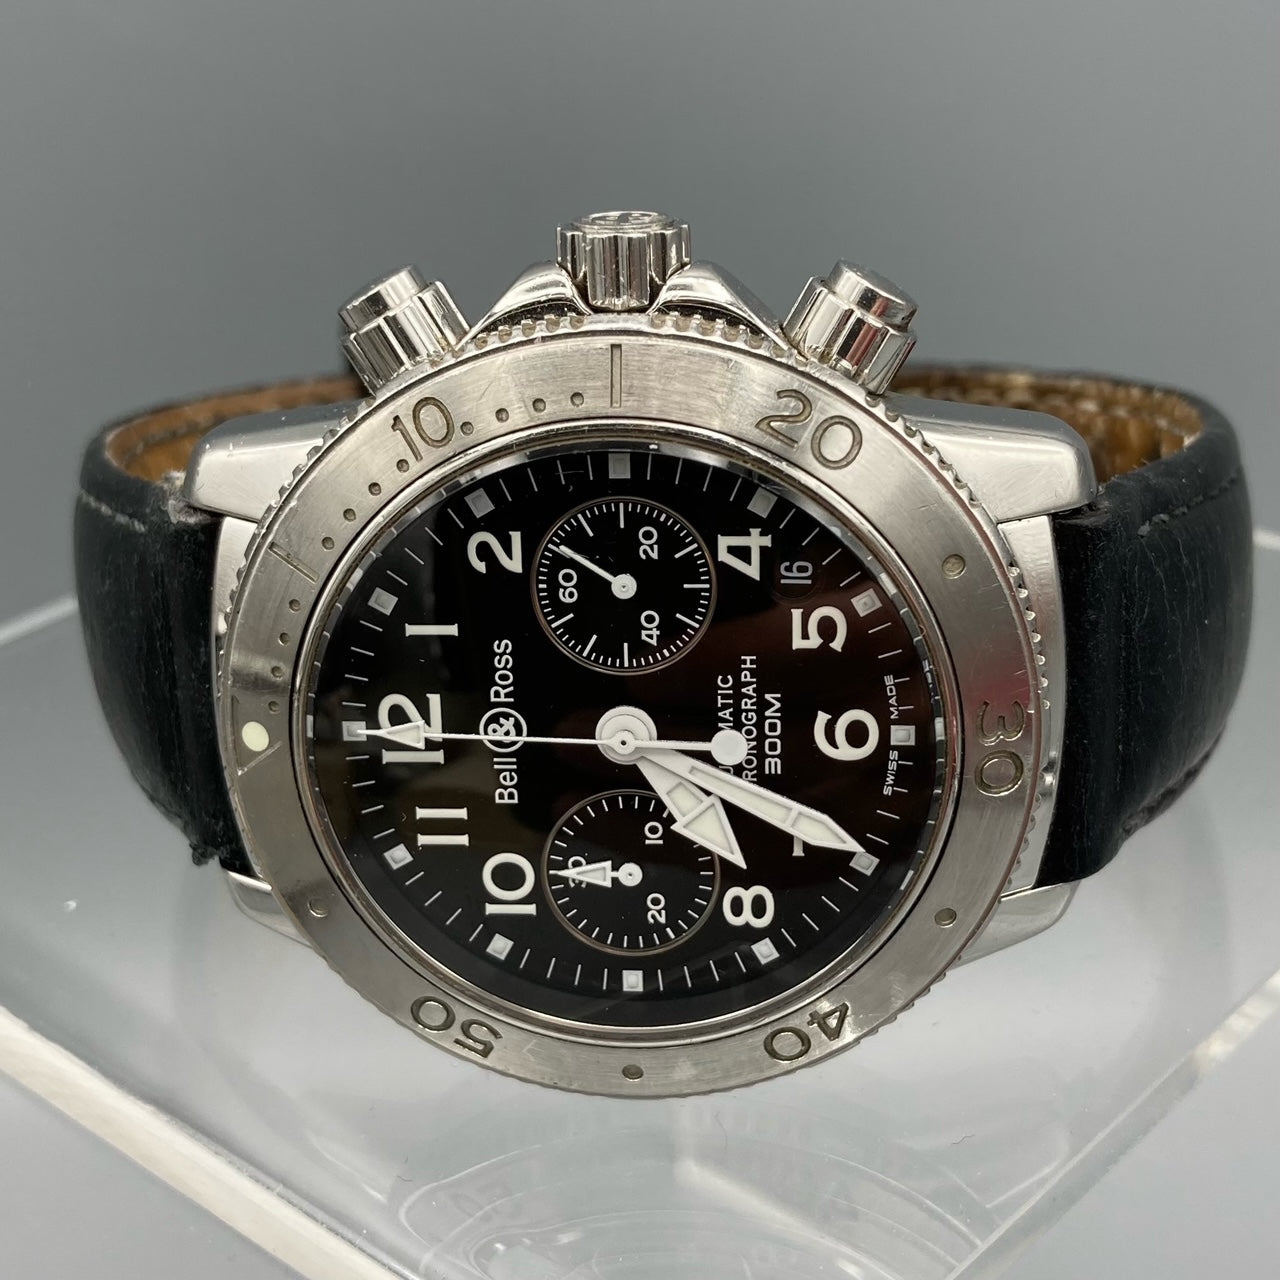 Montre Bell & Ross Chronographe Cadran Noir 500S - Diver 300